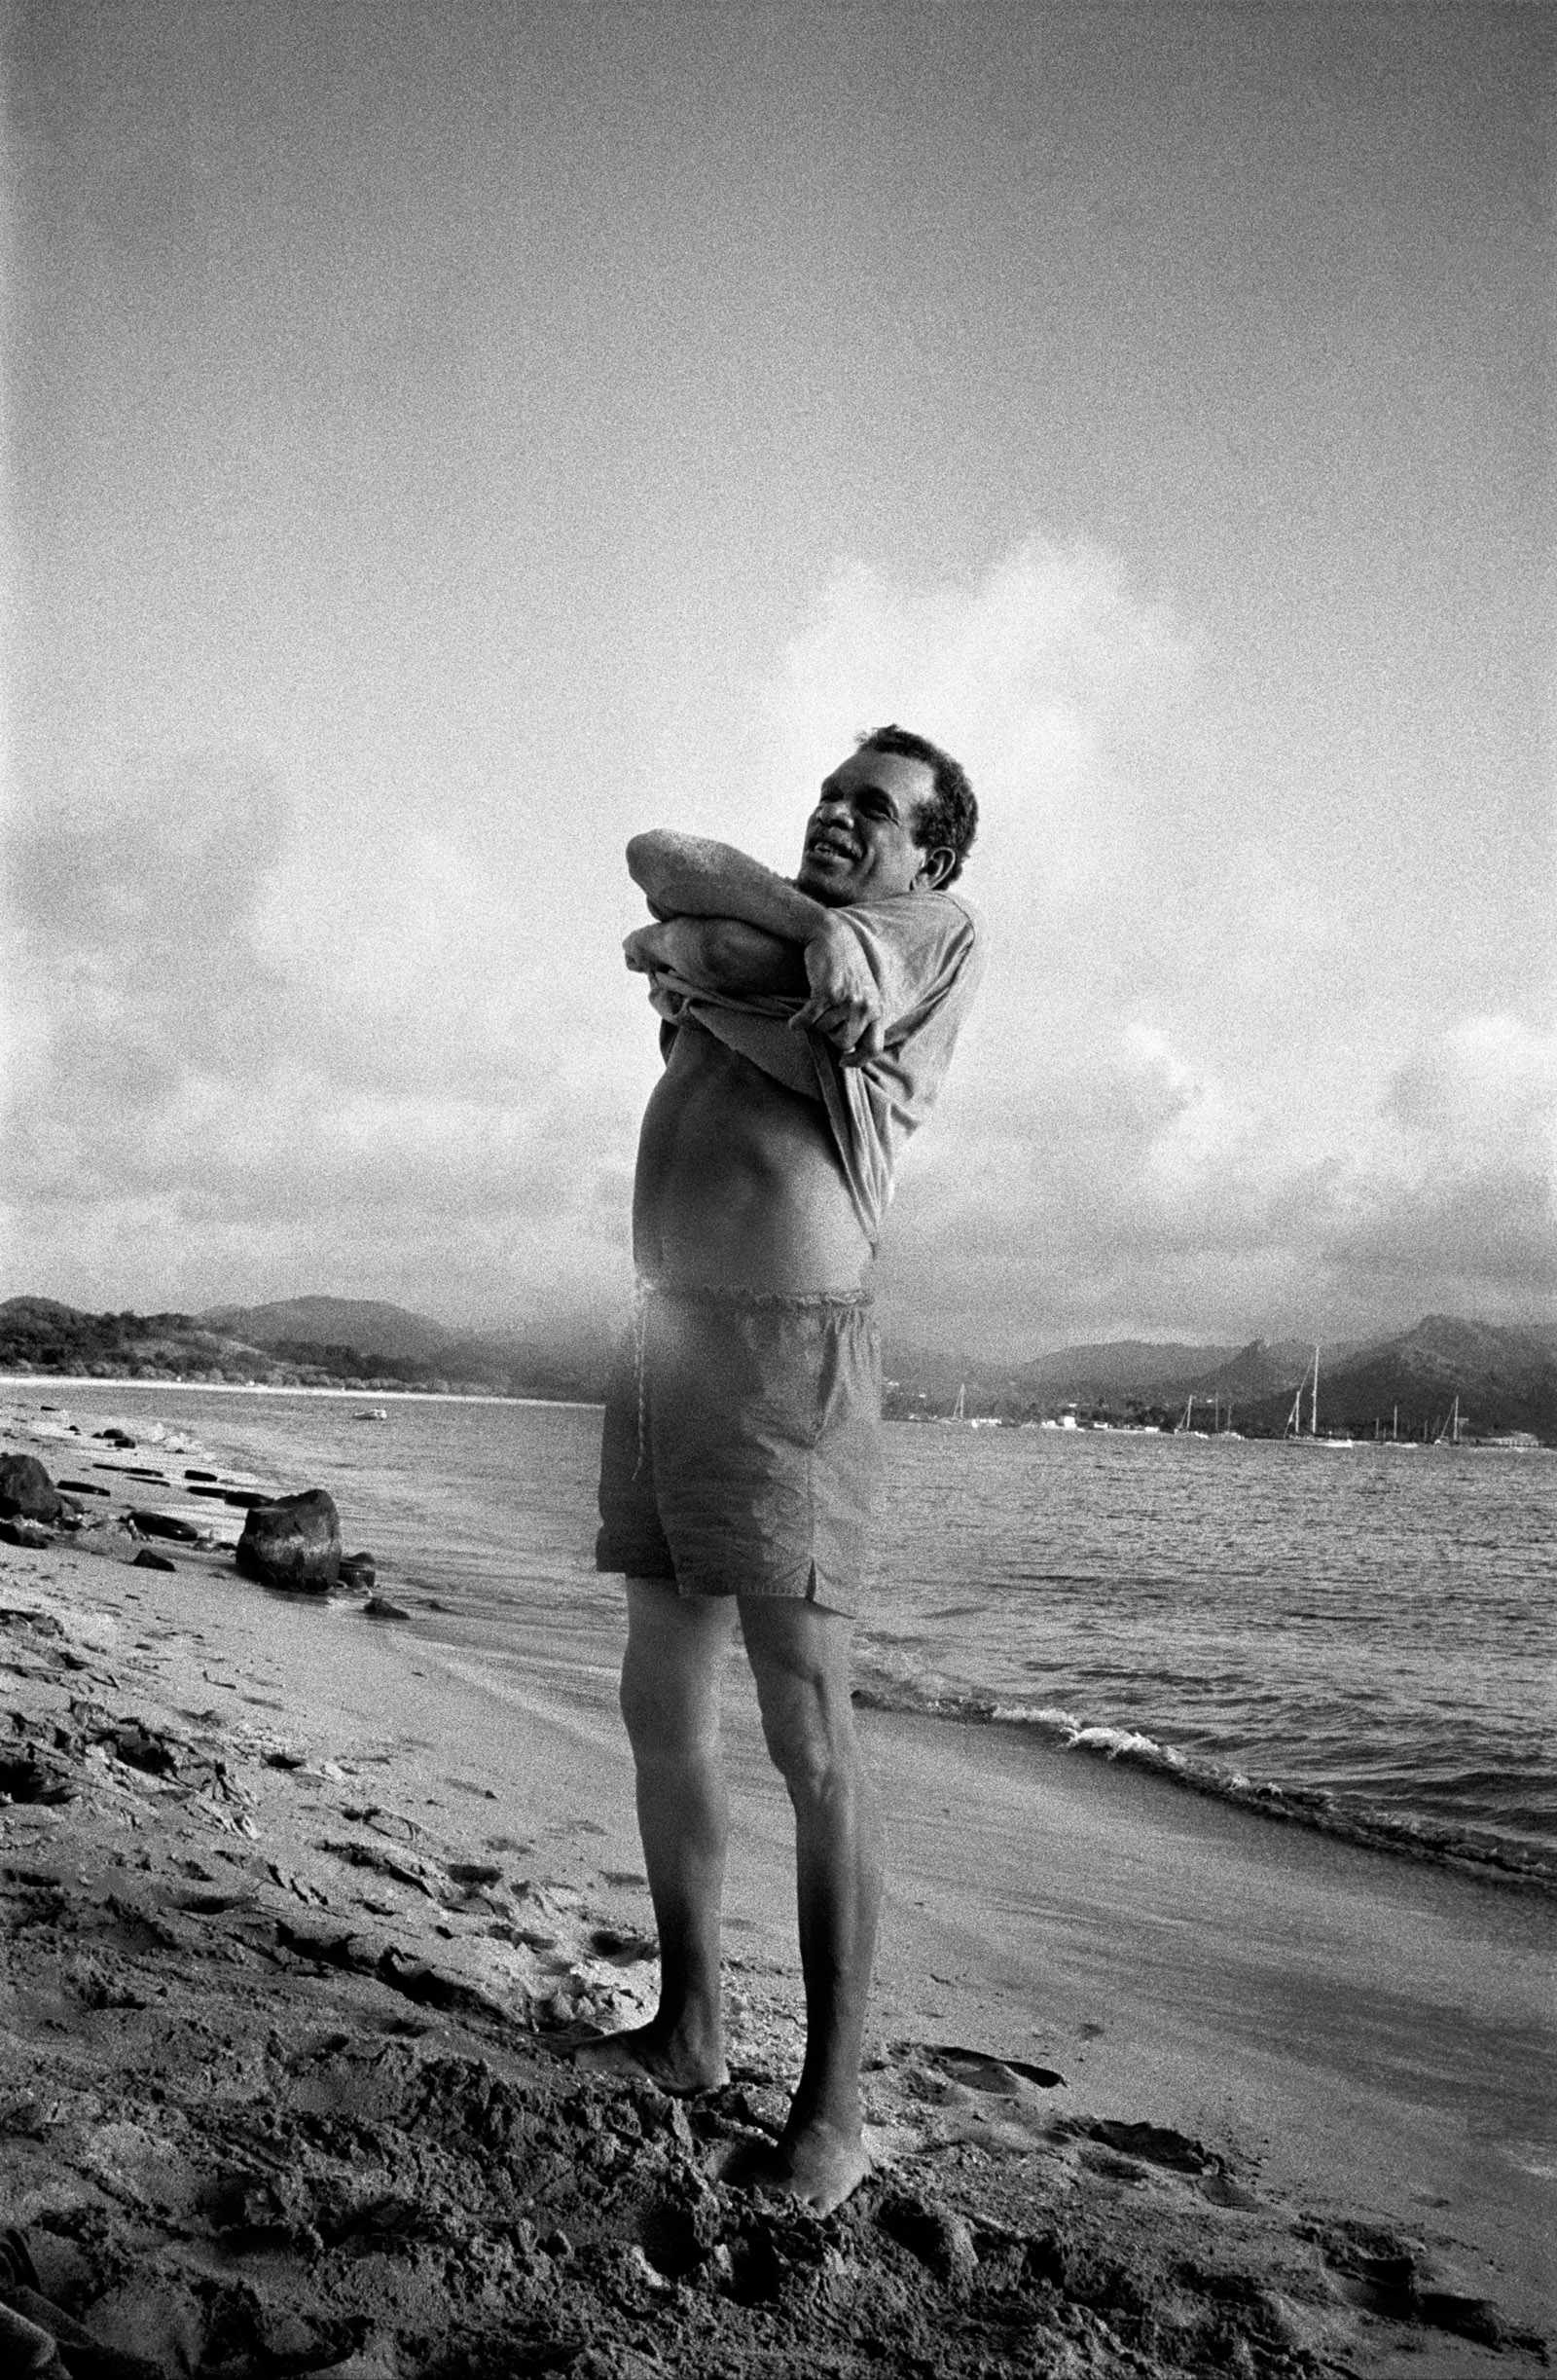 Derek Walcott, St. Lucia, 1994; photograph by Inge Morath